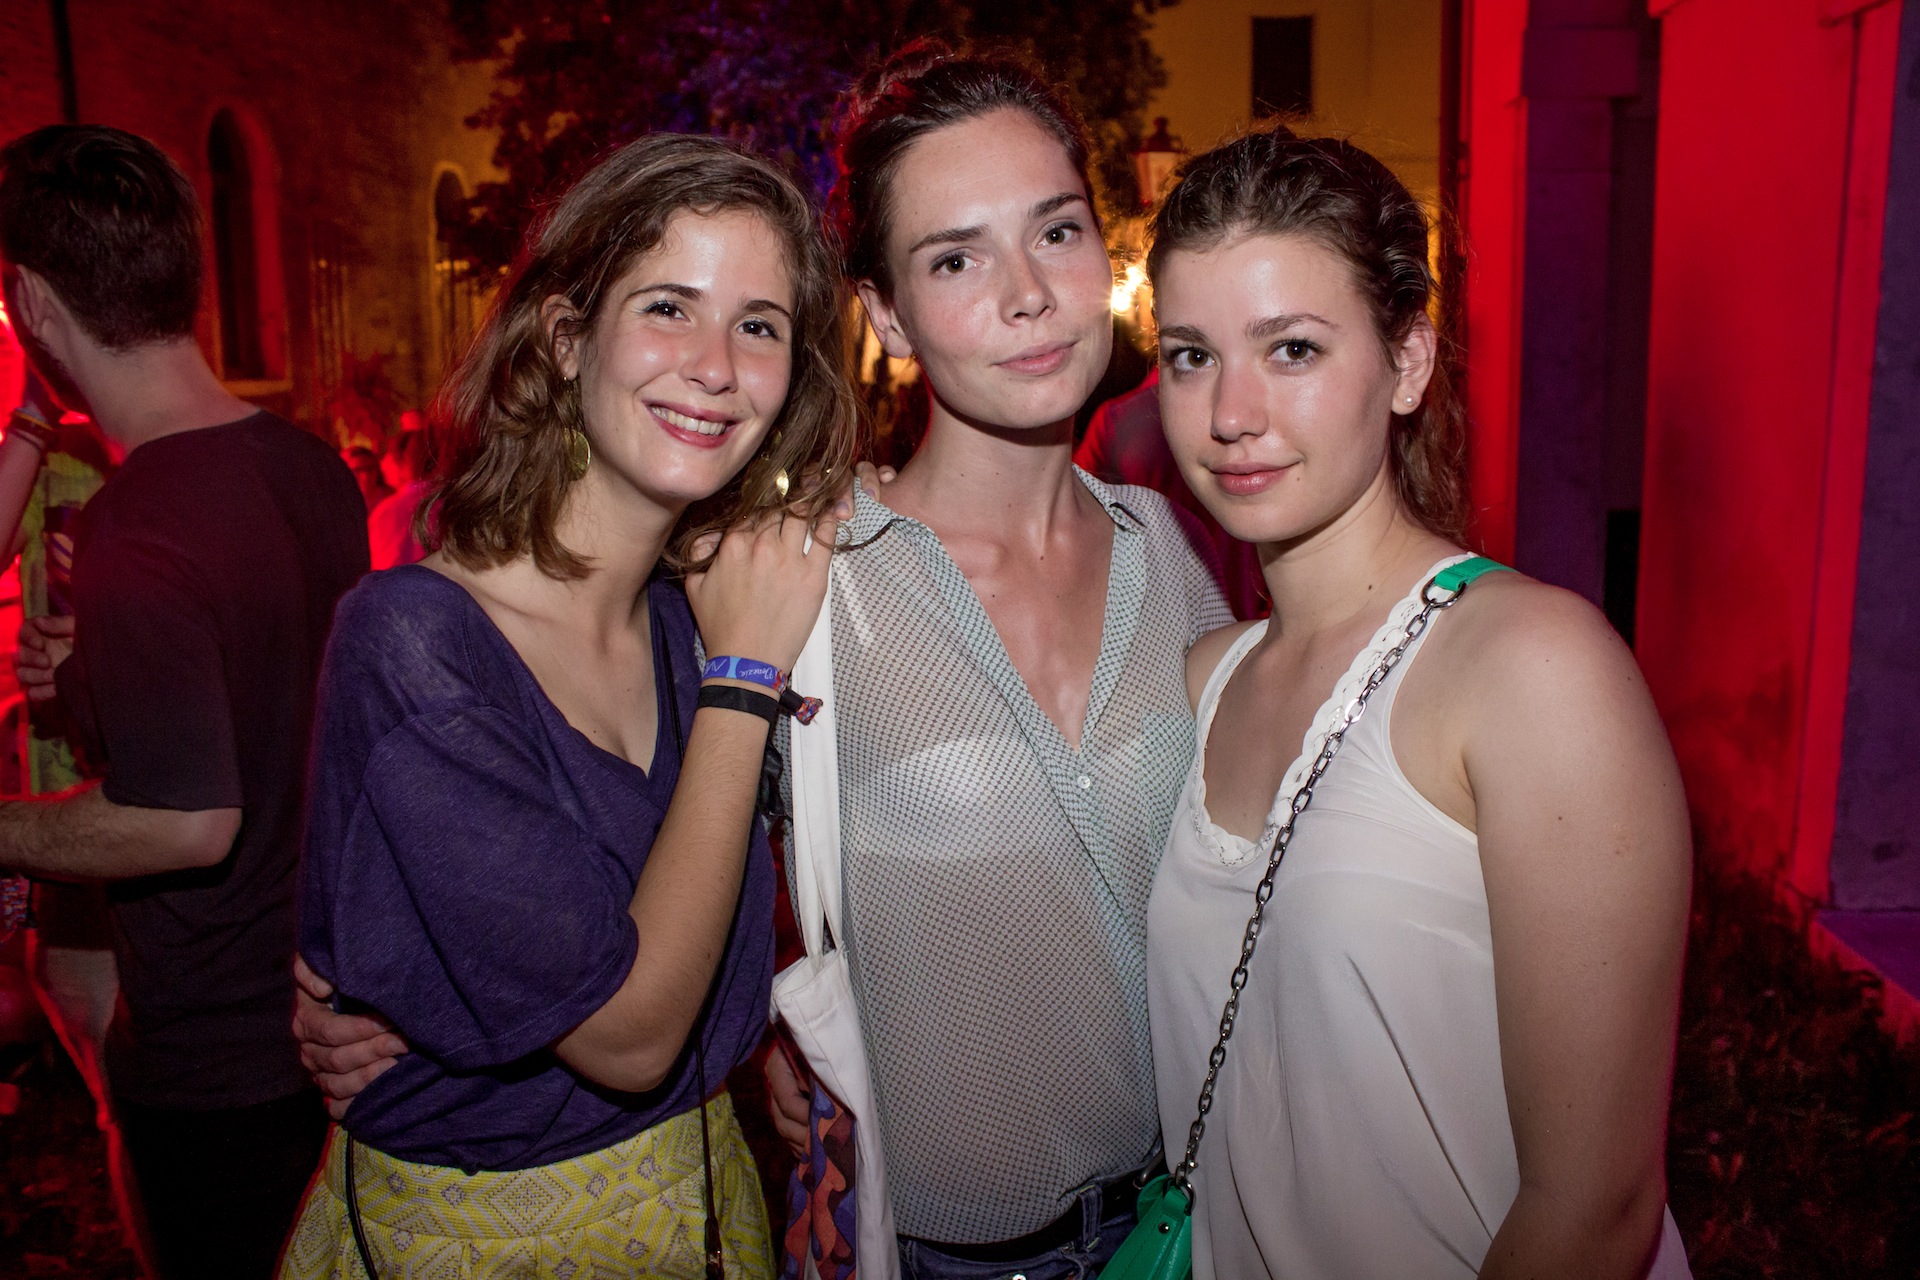 Venezia MORE Festival - 5 juin 2015 (Photo 2 - Laura Didier)